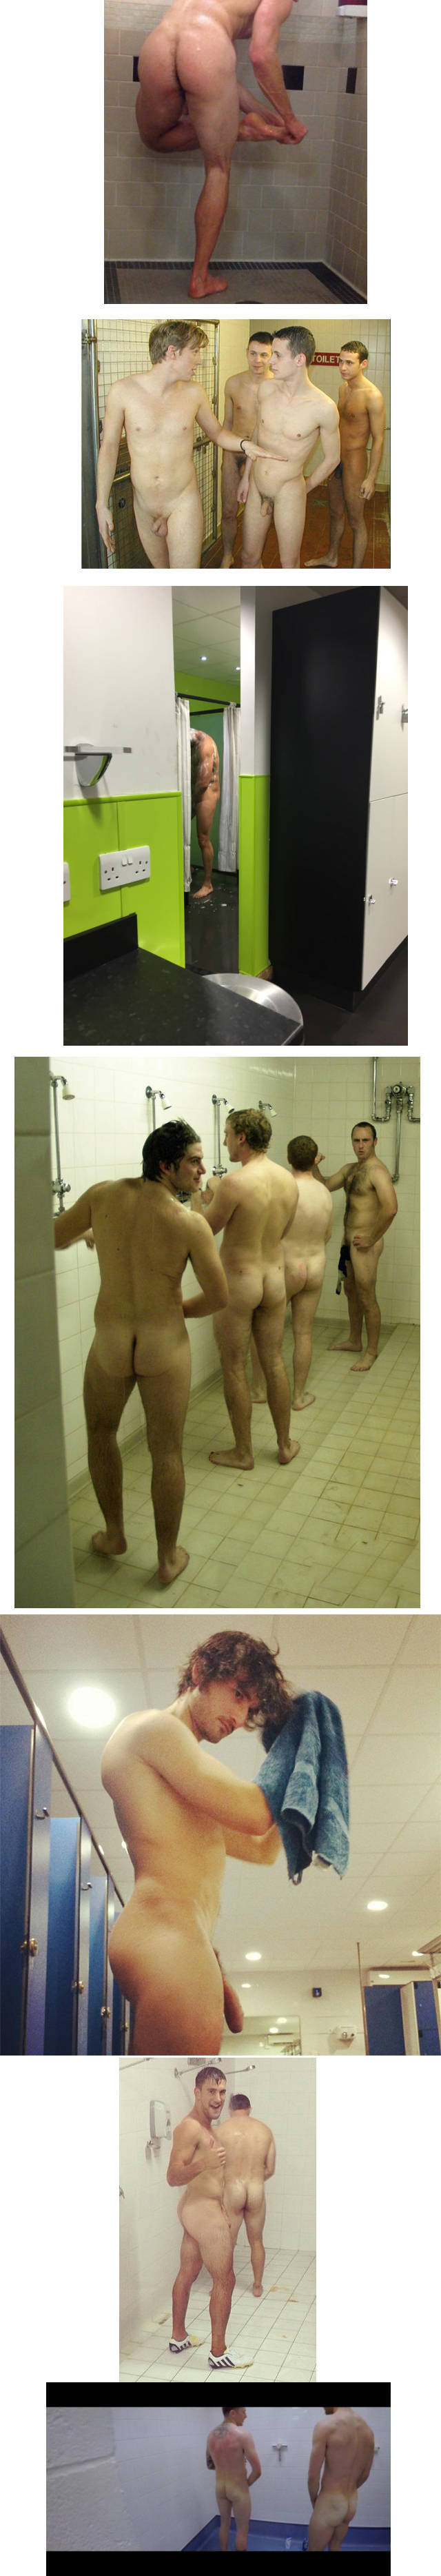 spycam naked guys caught shower gym lockerroom